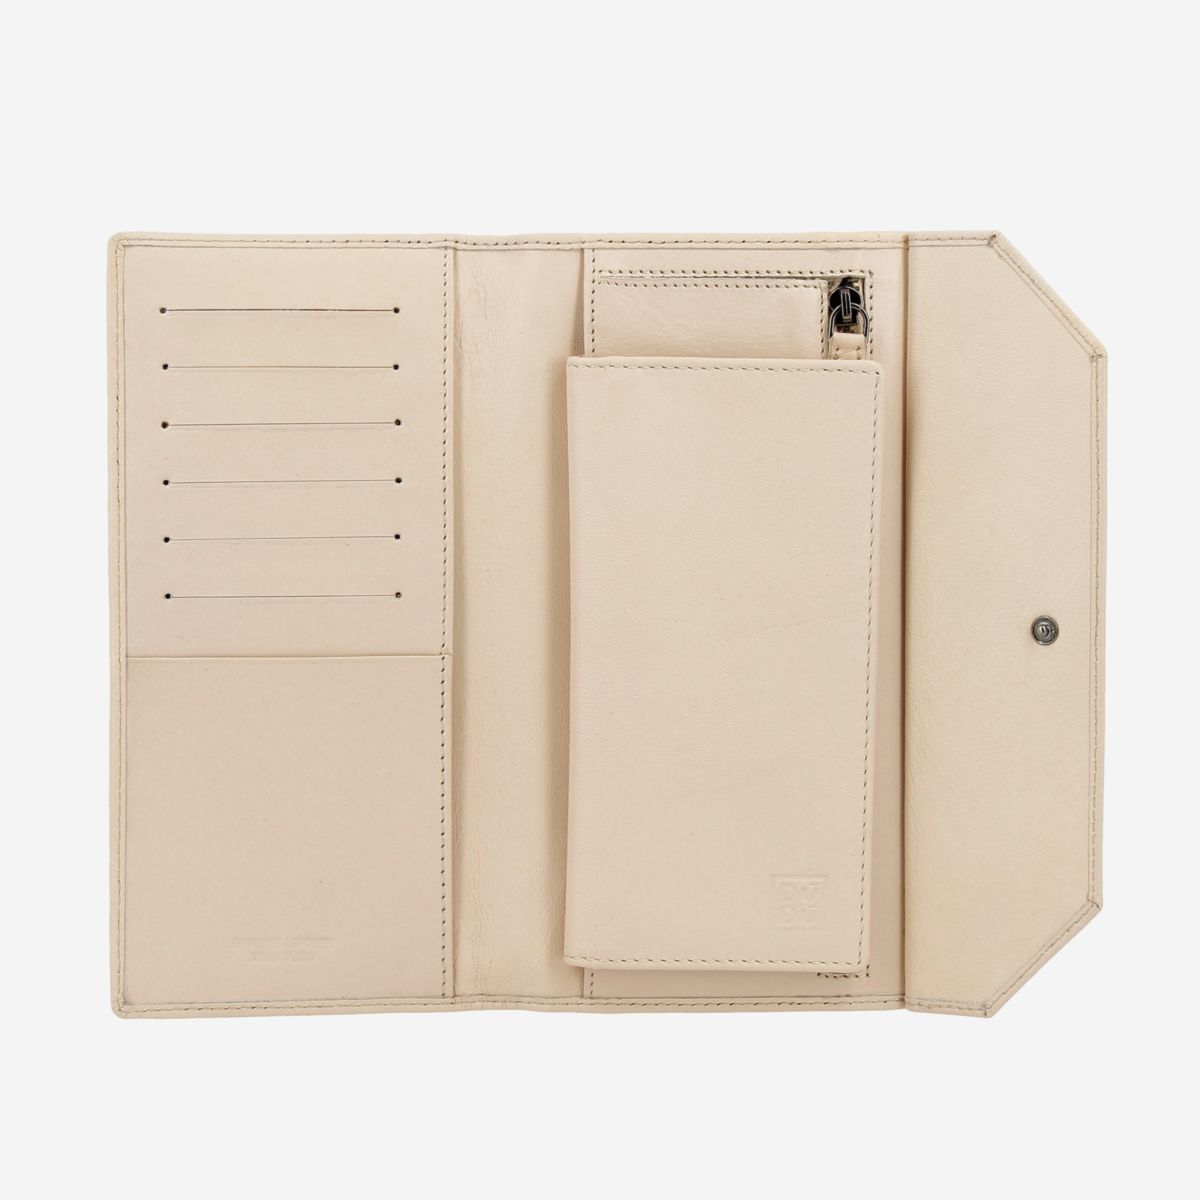 DuDu Ladies Envelope Leather Clutch Wallet Purse  - Ivory